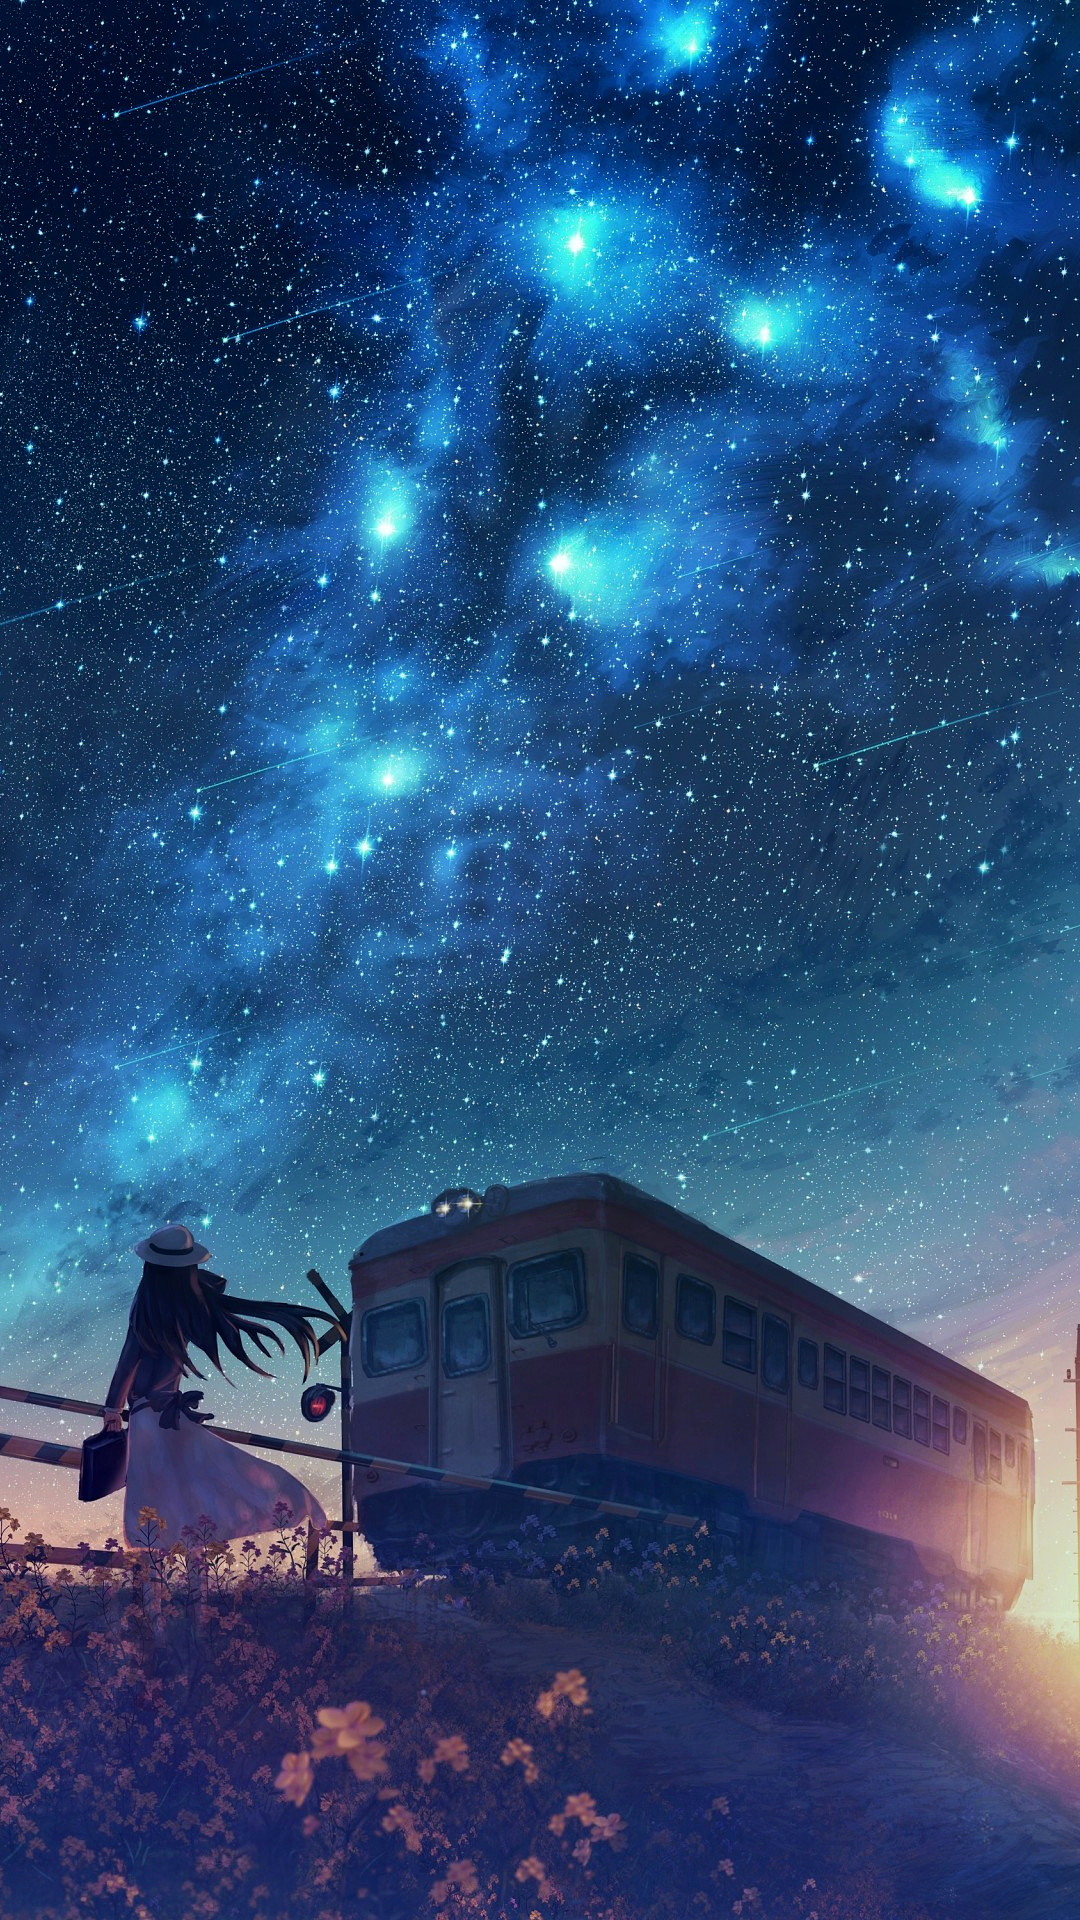 Silent Night | Anime scenery wallpaper, Scenery wallpaper, Anime scenery